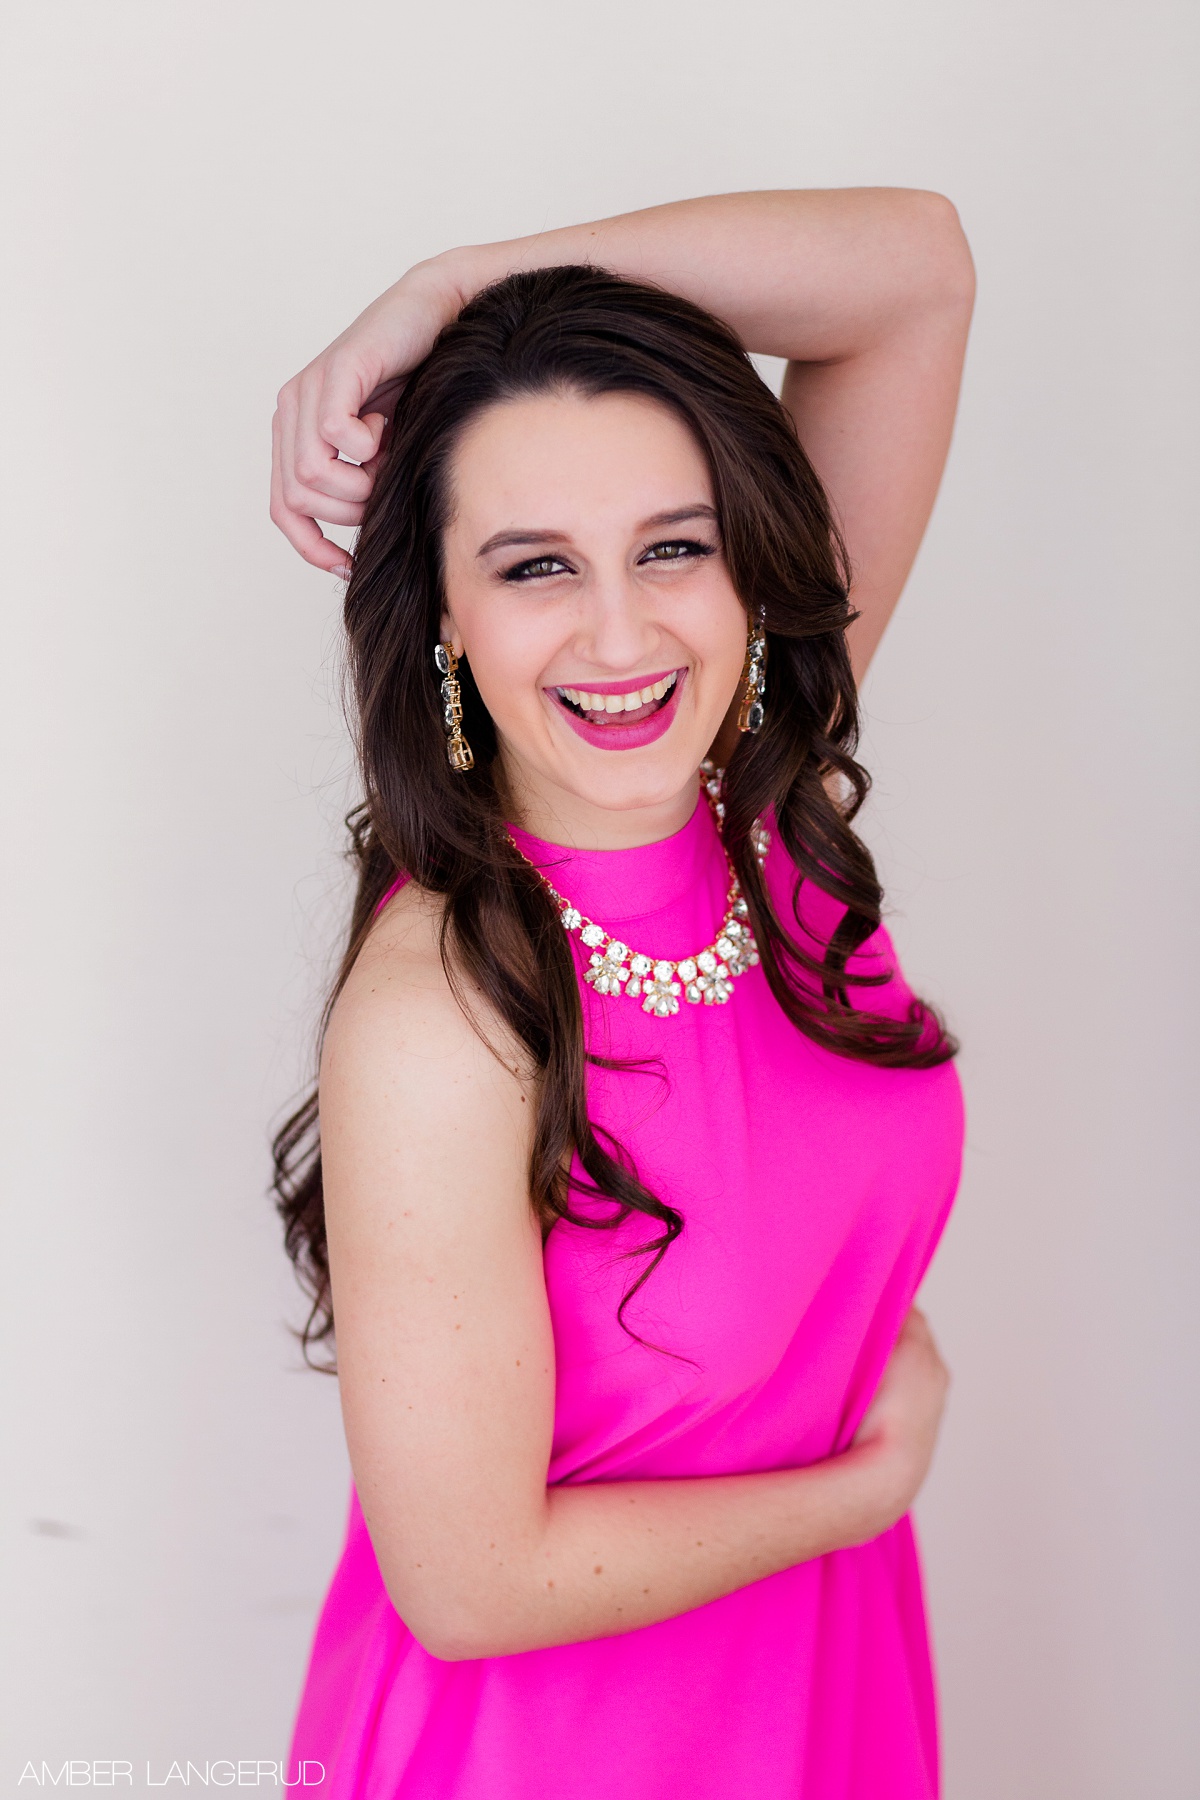 Sarah Labine Miss Northwest 2015 | Headshots by Amber Langerud Photography out of Audubon, MN